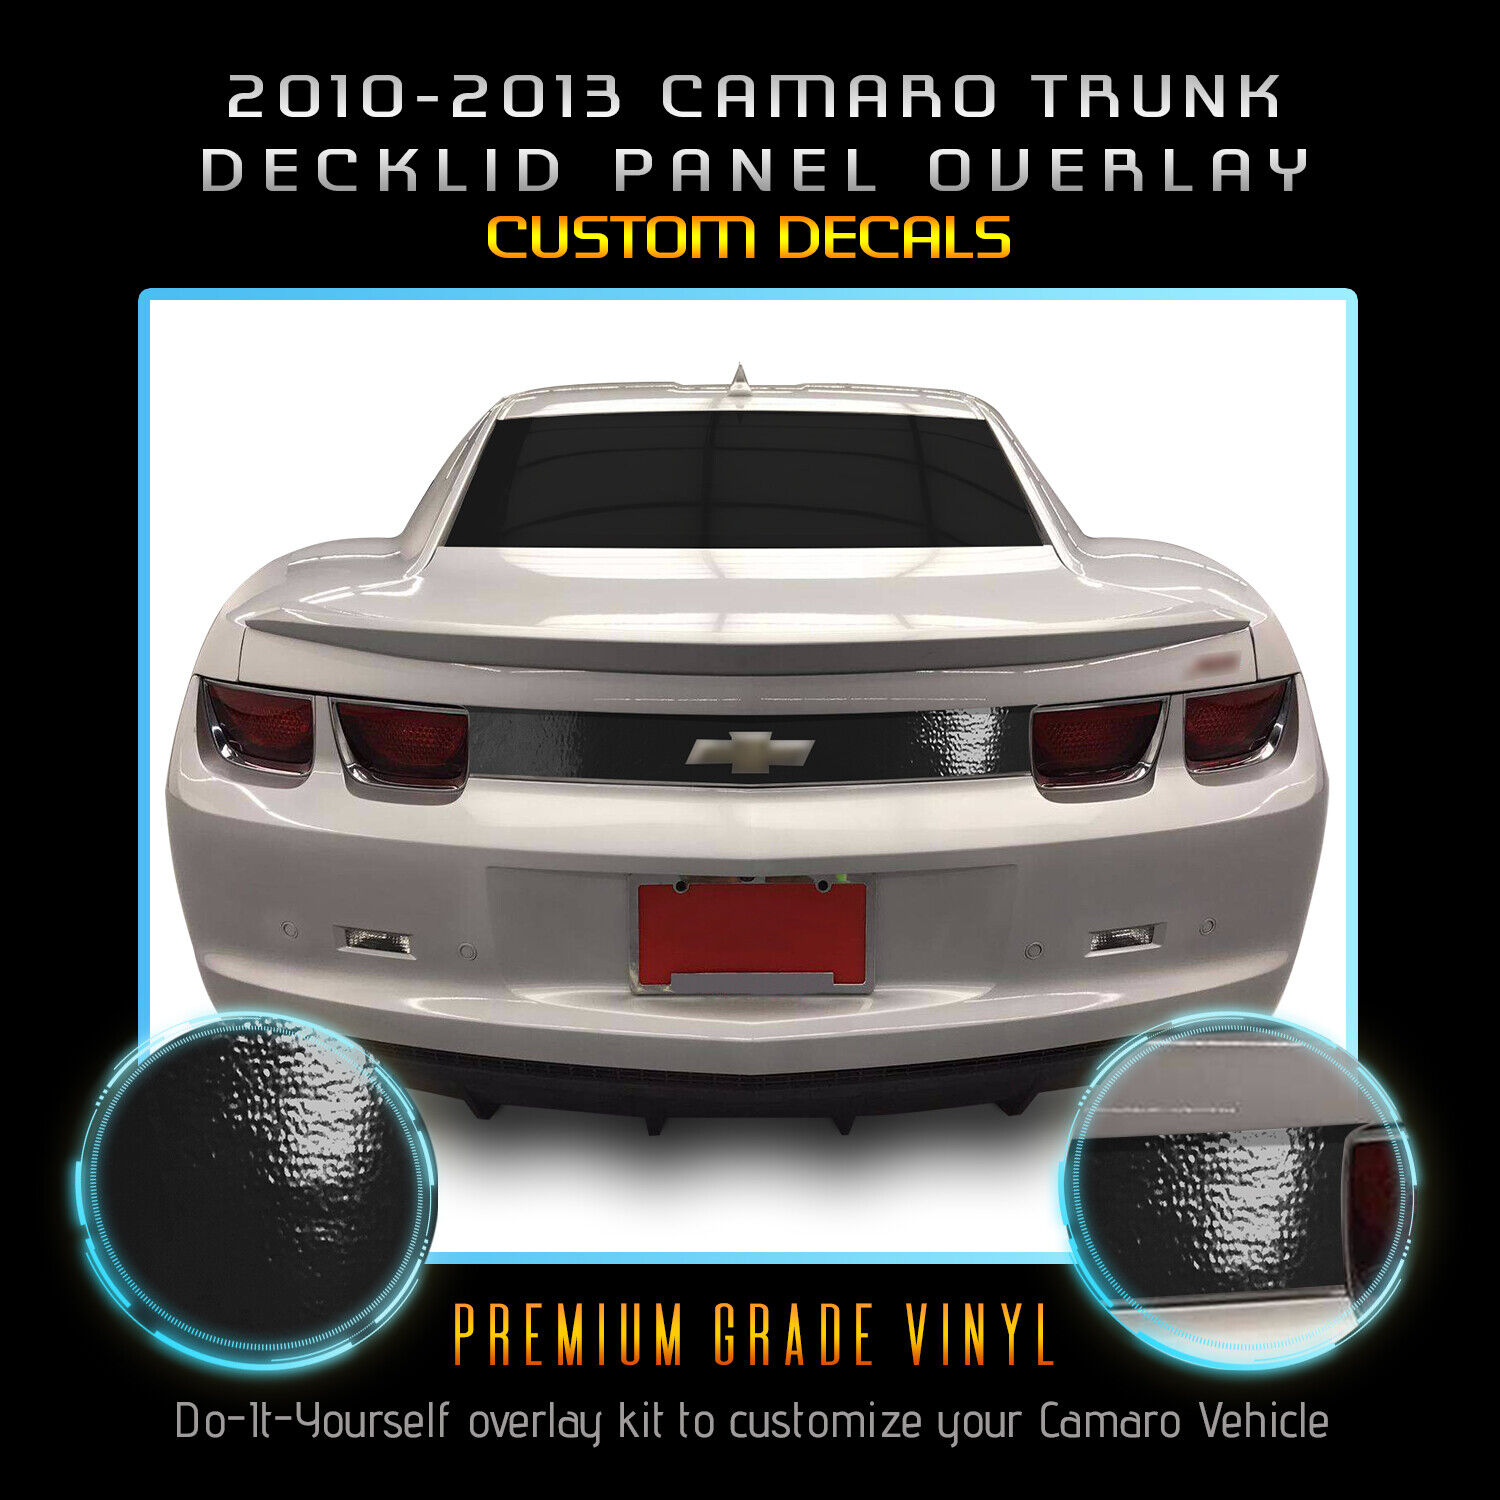 For 2010-2013 Camaro Trunk Deck Panel Overlay Accent Vinyl Decal - Gloss Vinyl